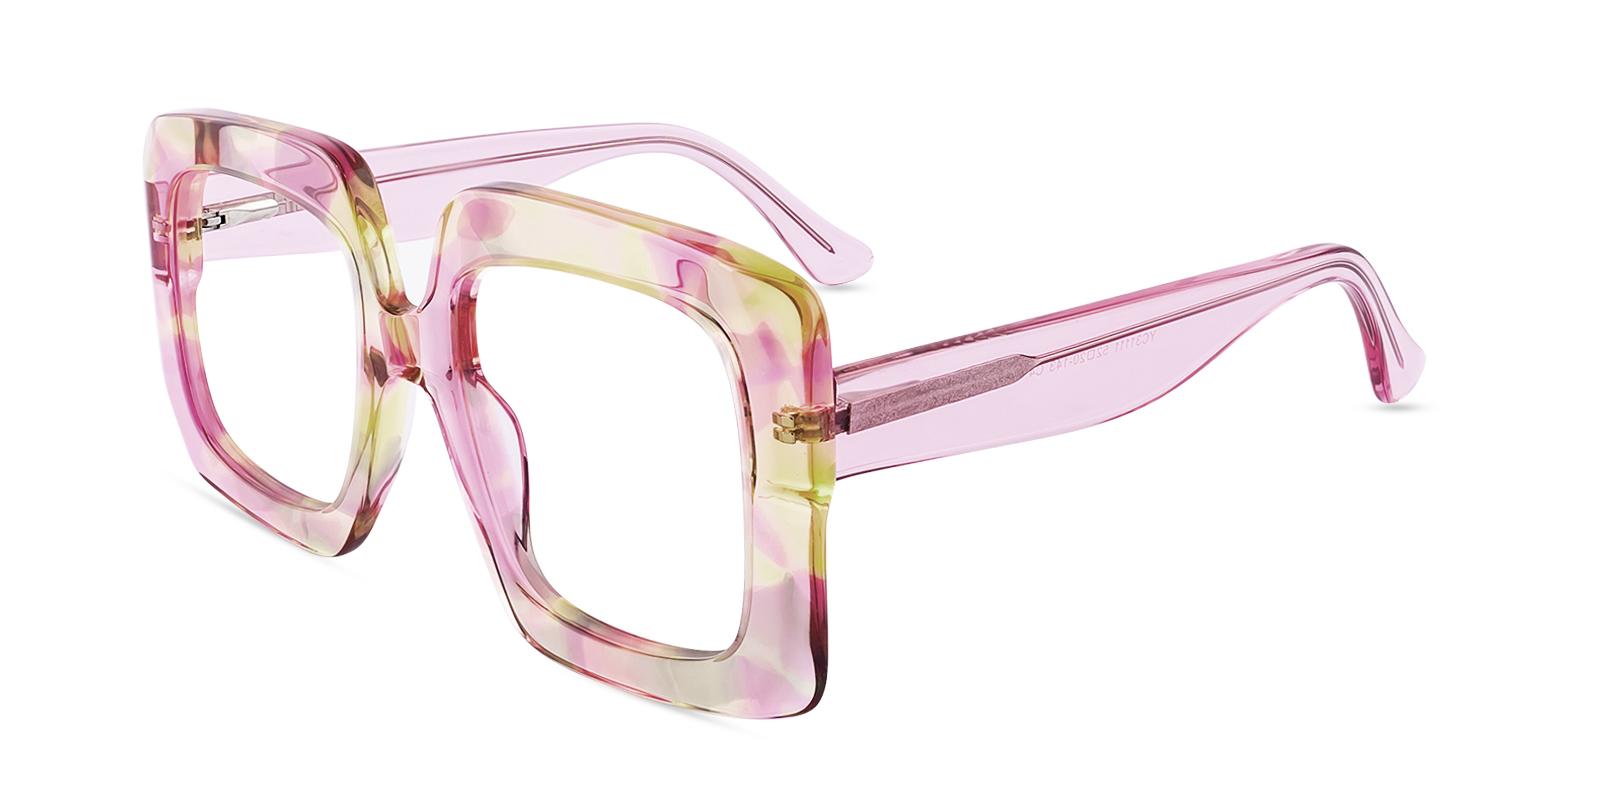 Volcapital Pattern Acetate Eyeglasses , SpringHinges , UniversalBridgeFit Frames from ABBE Glasses